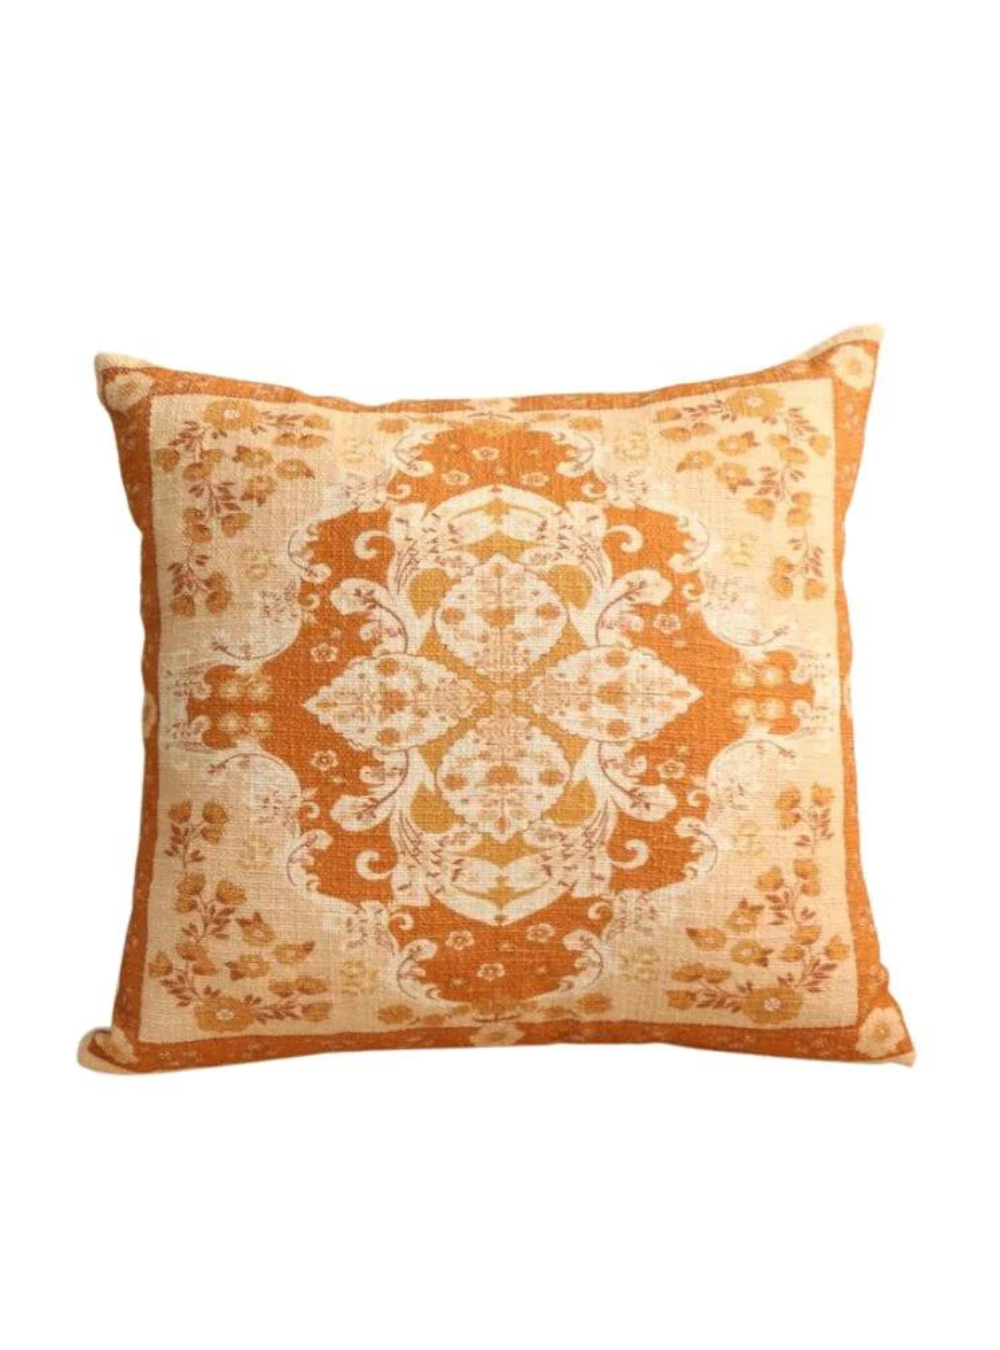 Enchanted Cushion Cover - Honey Ginger